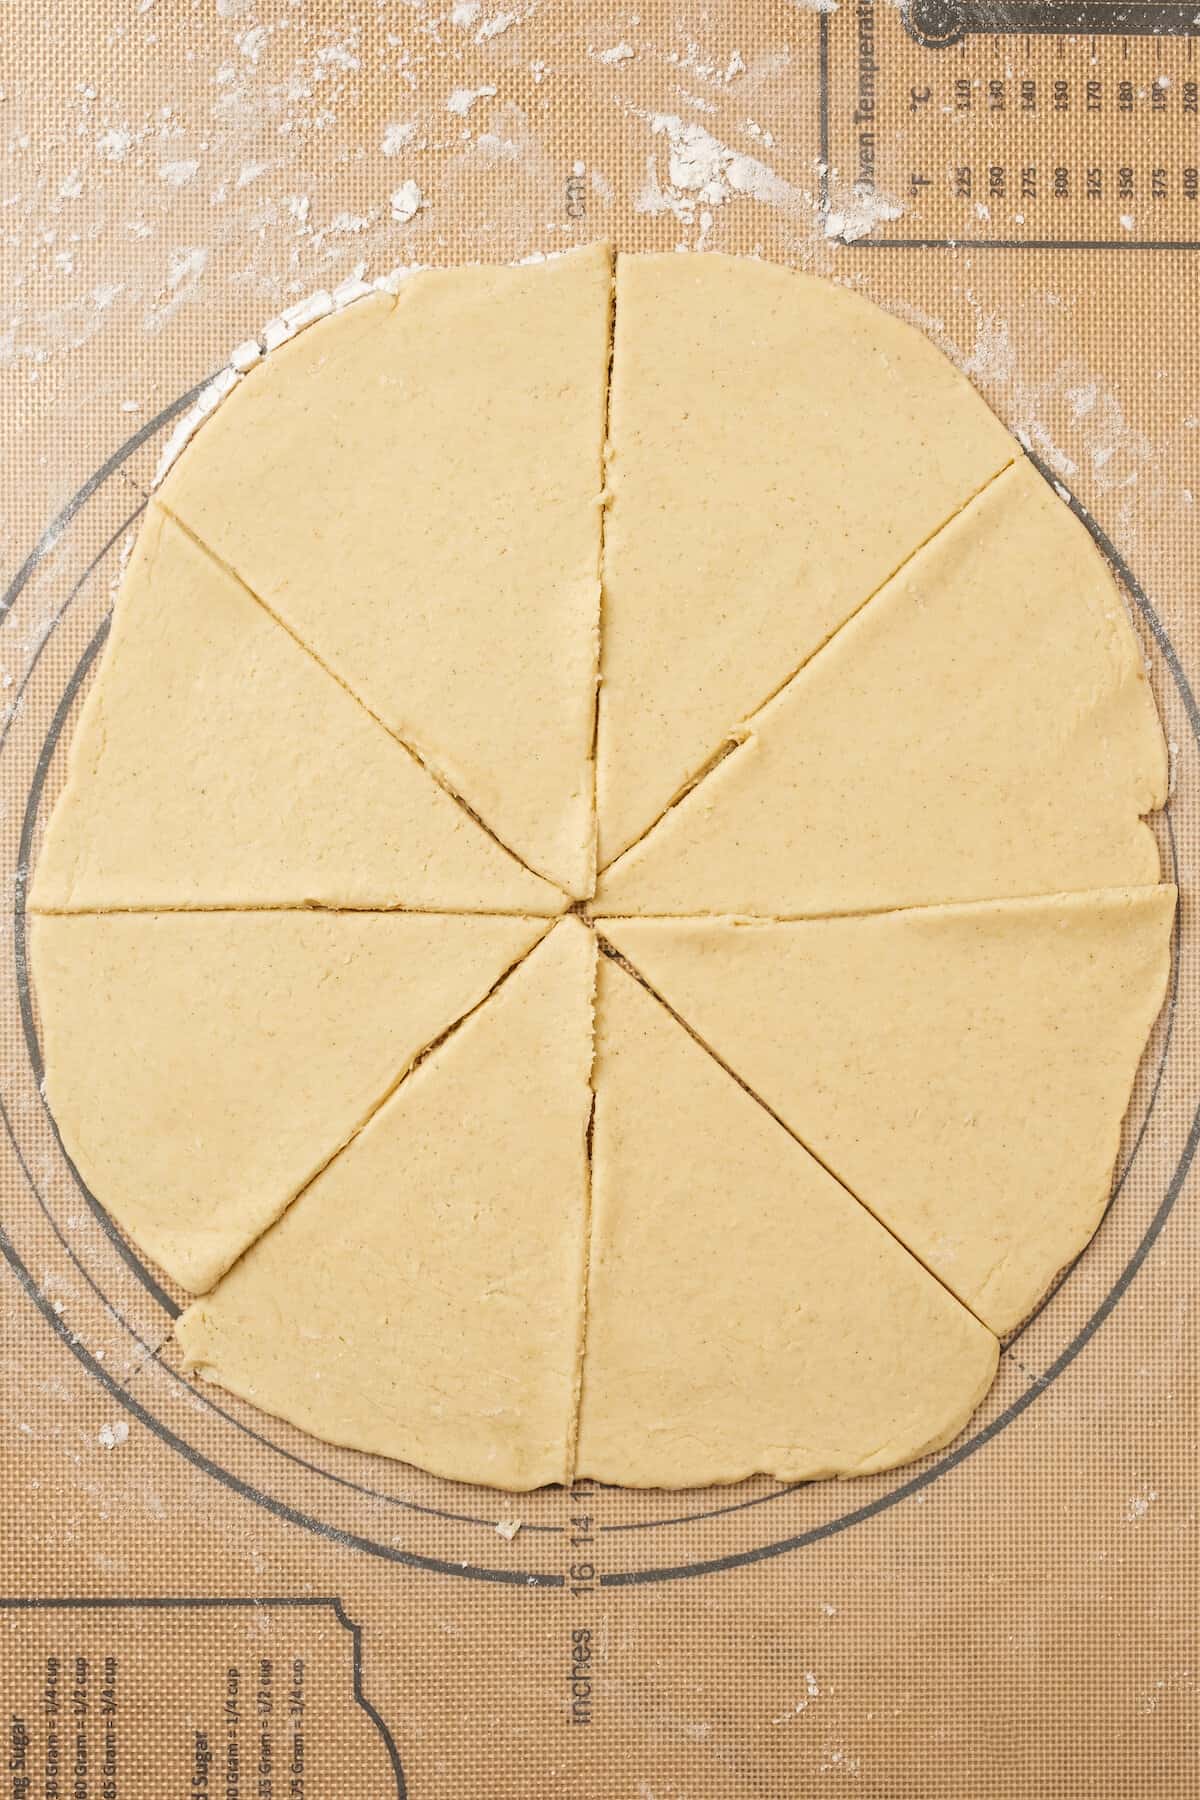 A thin dough circle cut into eight triangles on a floured surface.